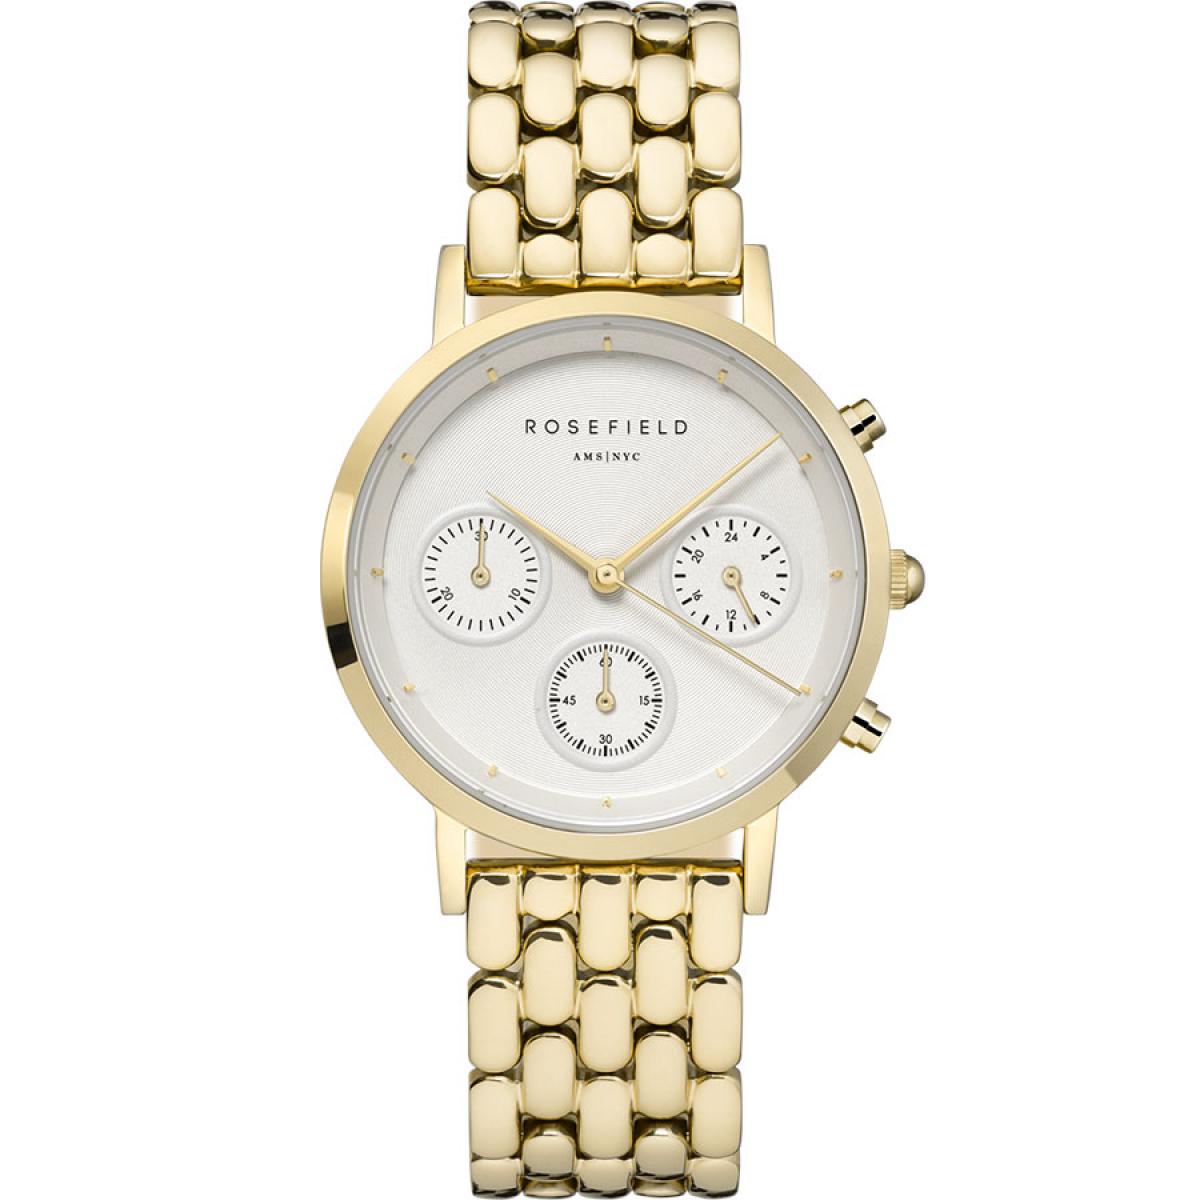 Promo : Montre Rosefield NWG-N90 - Boîtier métal doré brillant cadran blanc chronographe bracelet ac